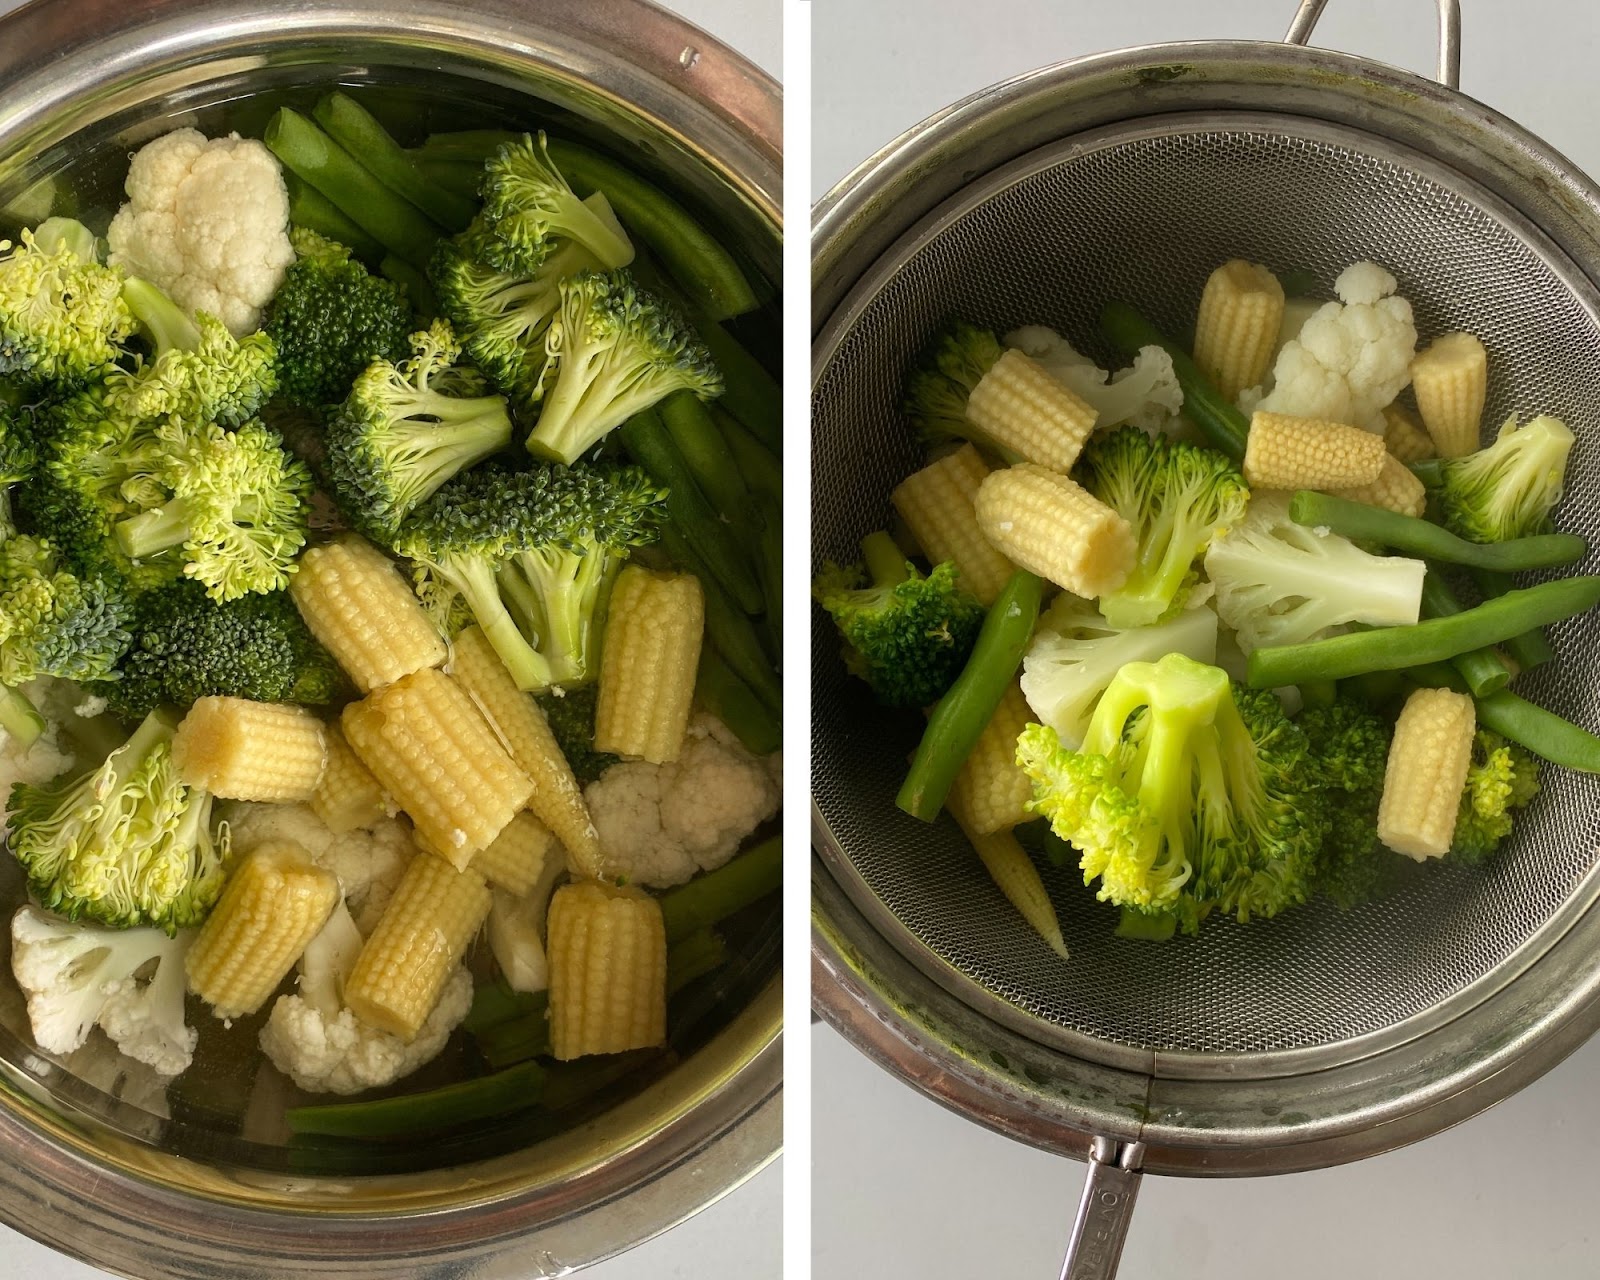 Steps for Vegetable Stir Fry